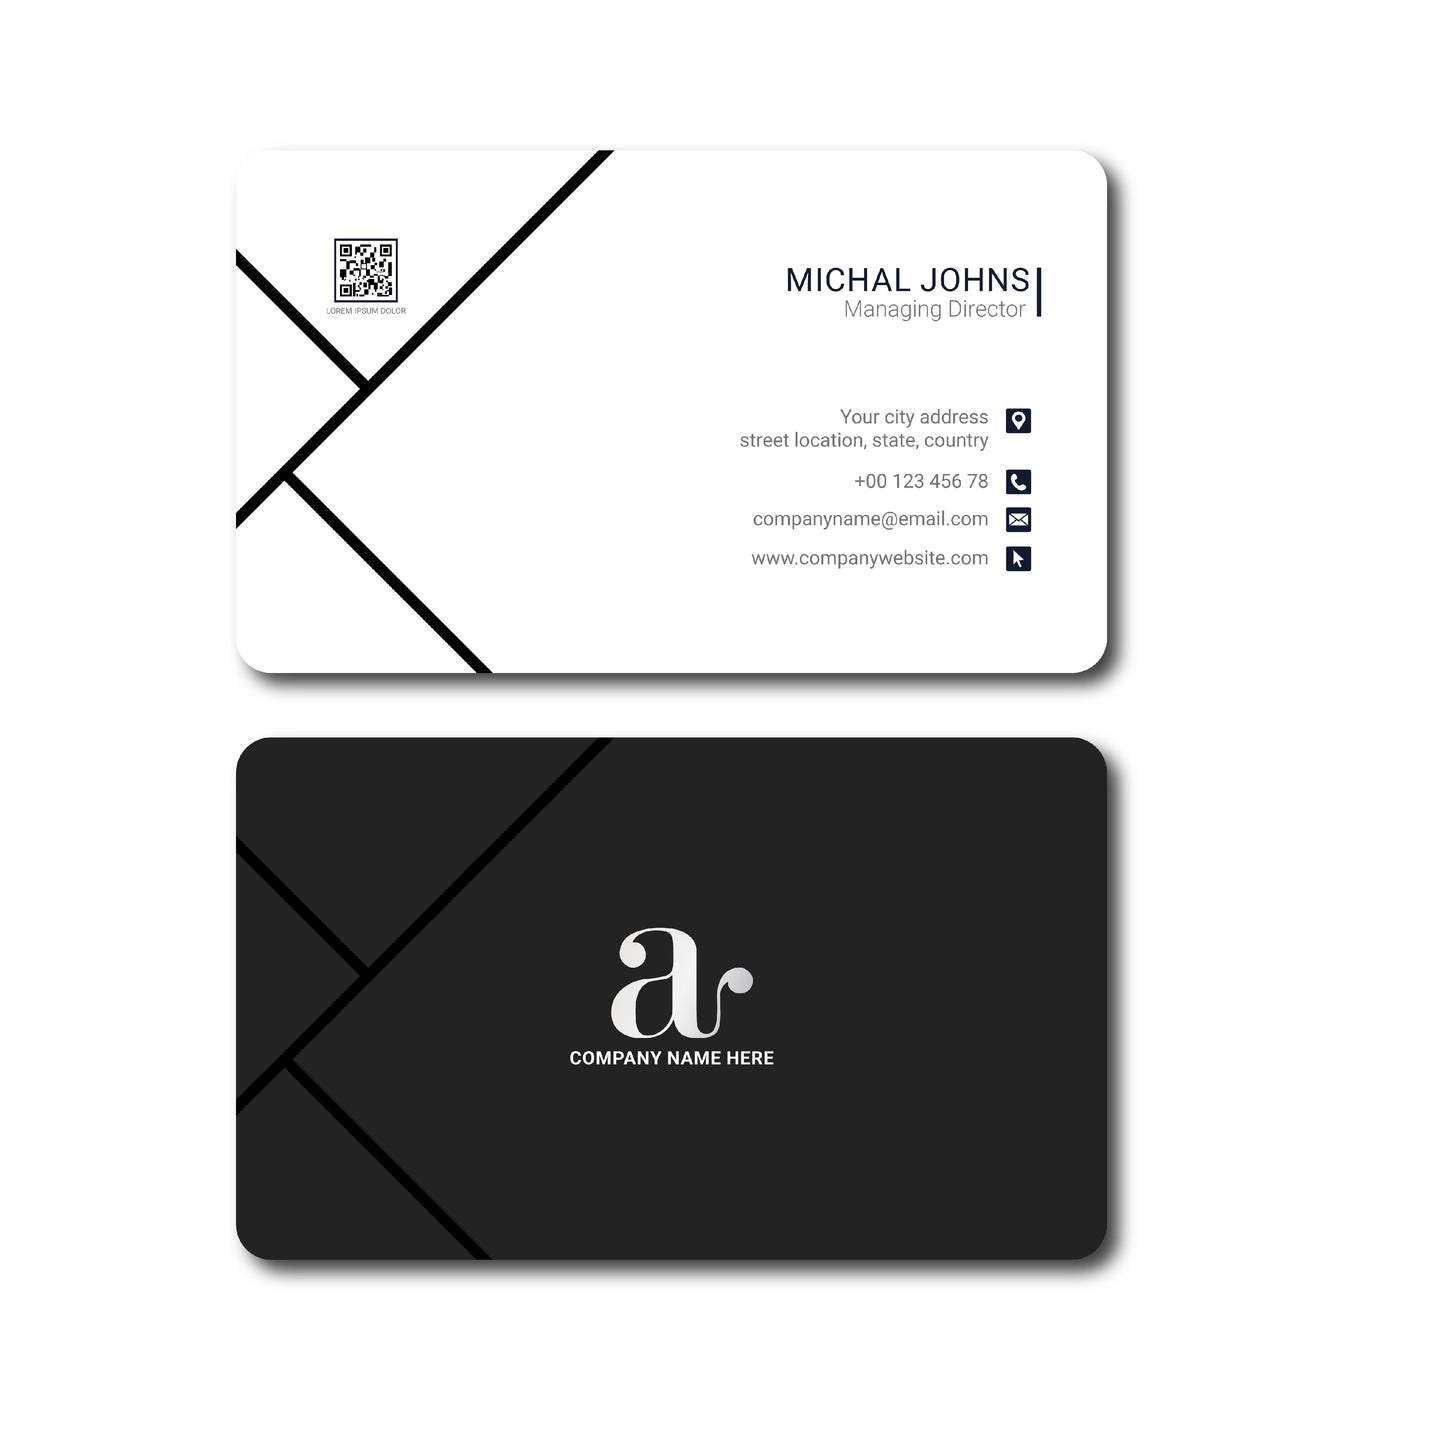 Simple black custom business cards, 500 pcs Business cards, real state business cards, personalized business cards, customized business cards